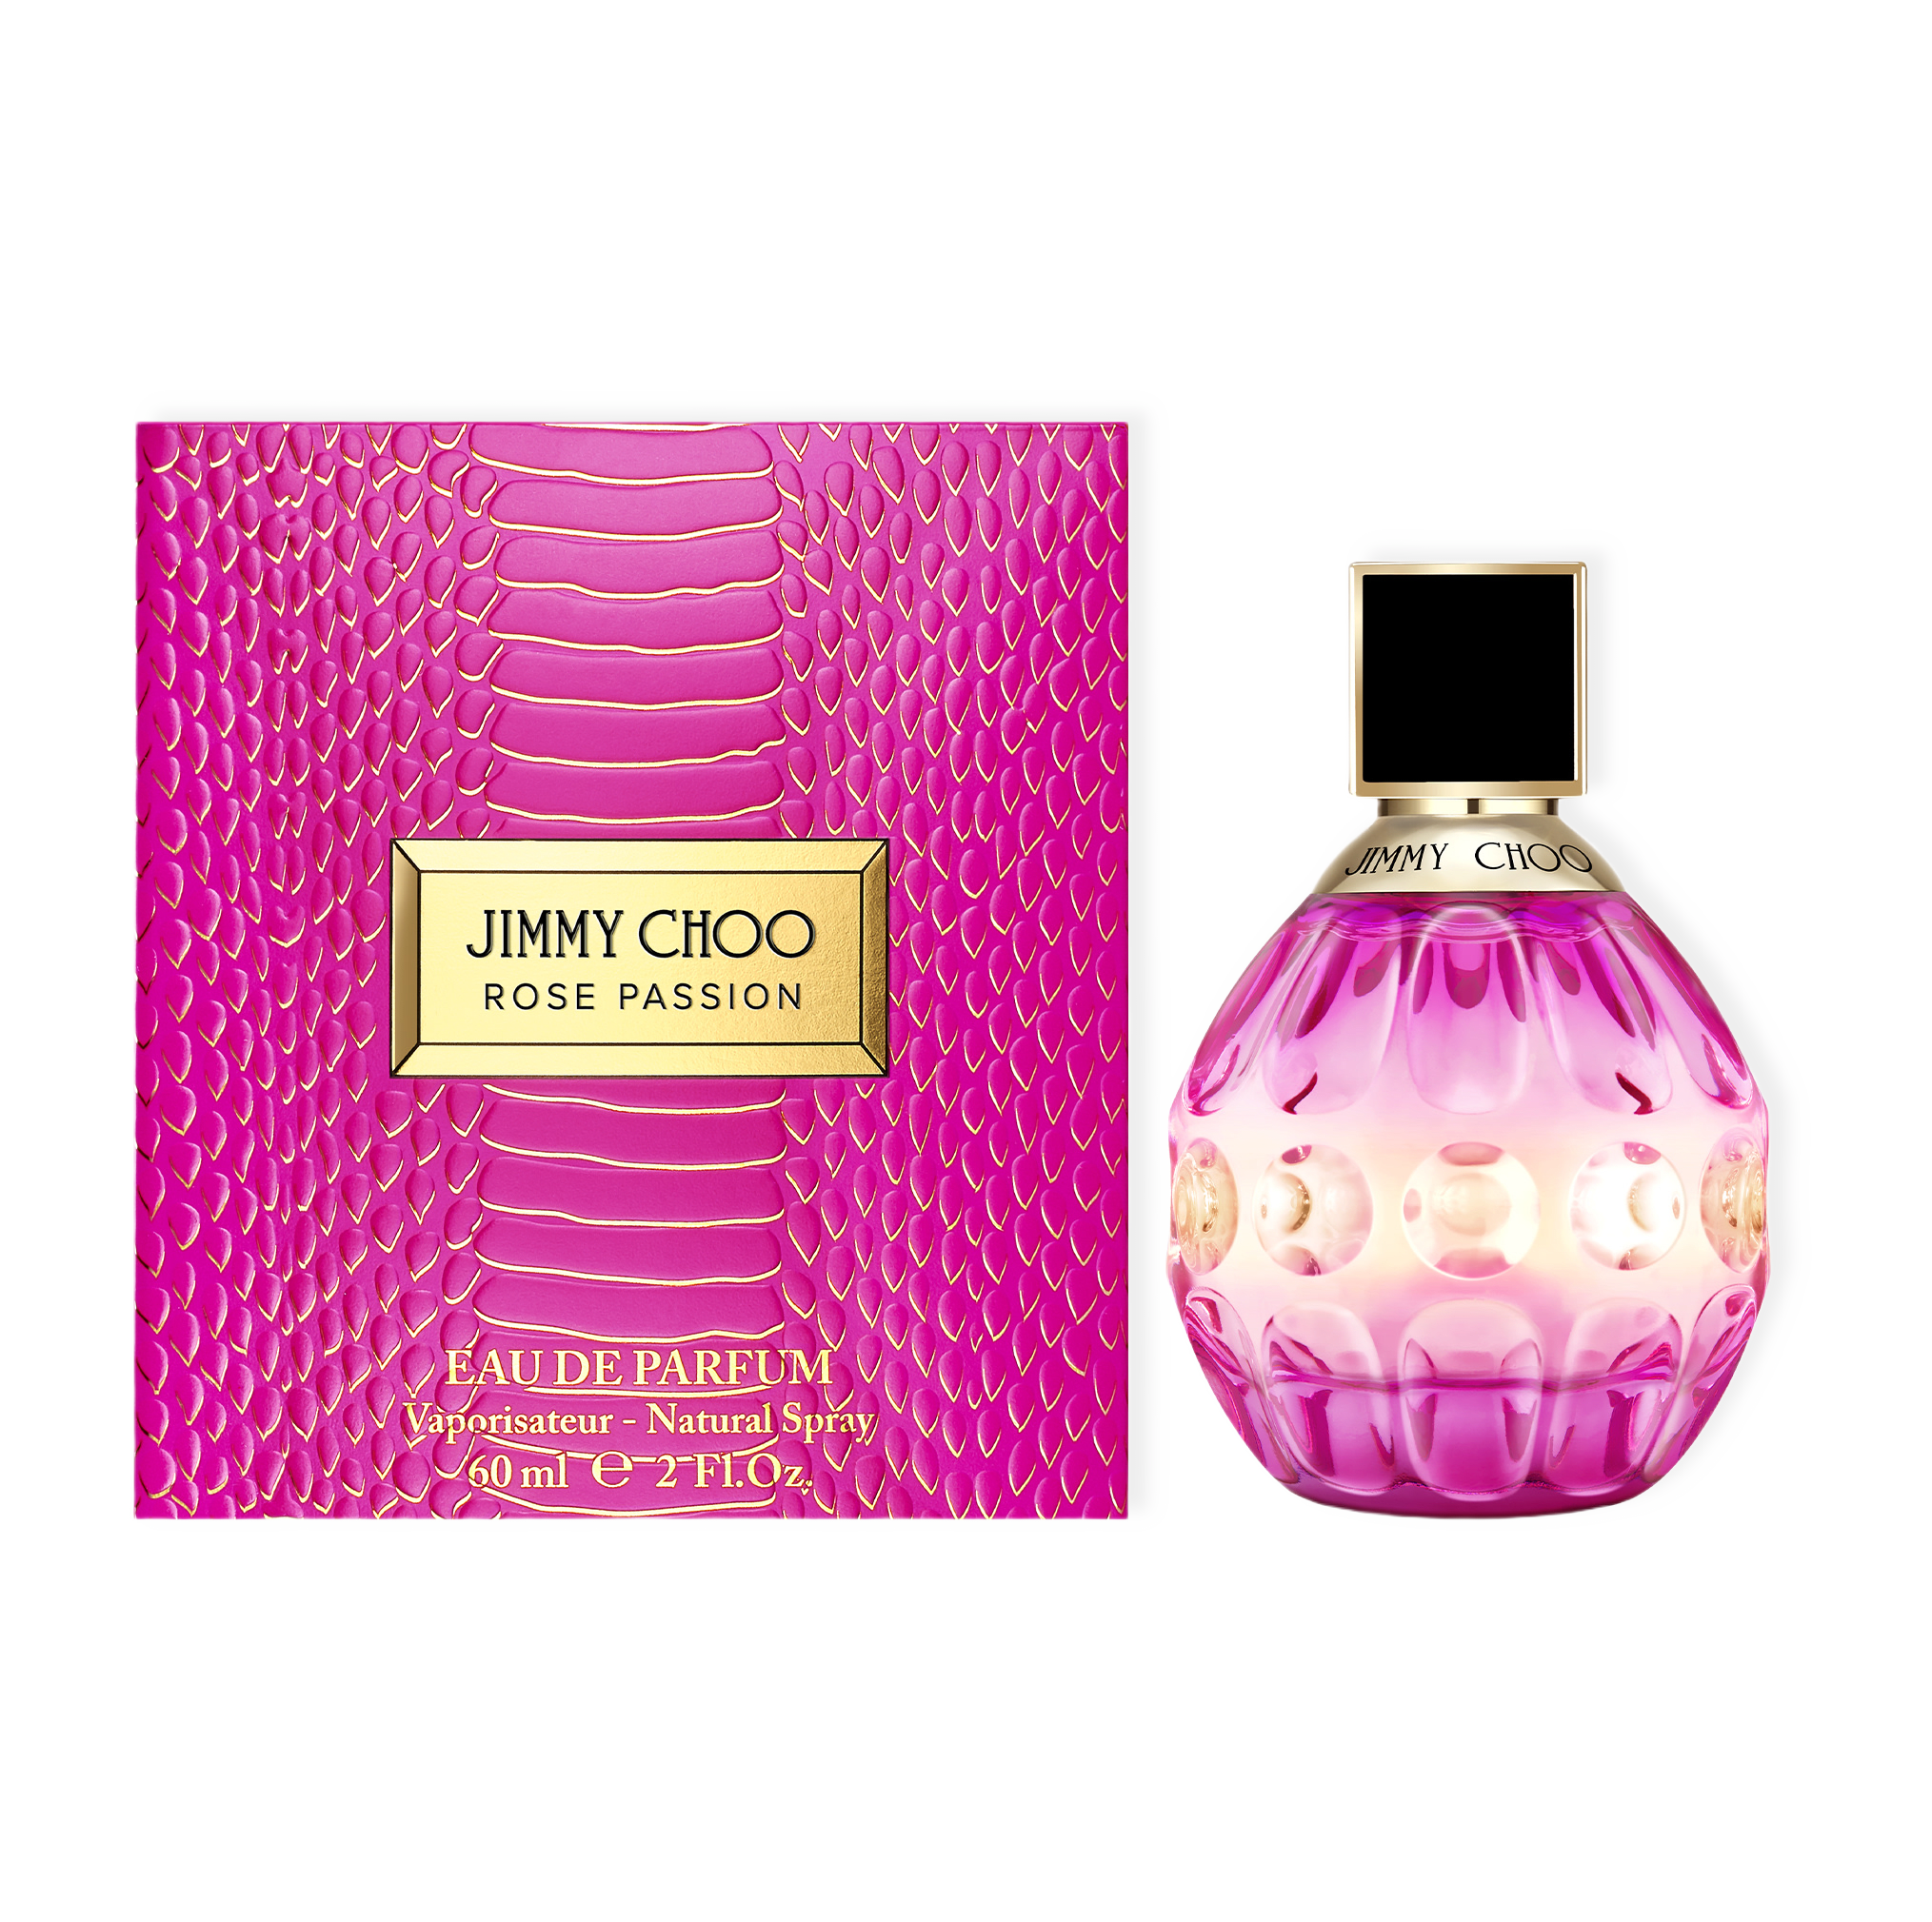 Jimmy Choo Rose Passion Eau de Parfum från Jimmy Choo